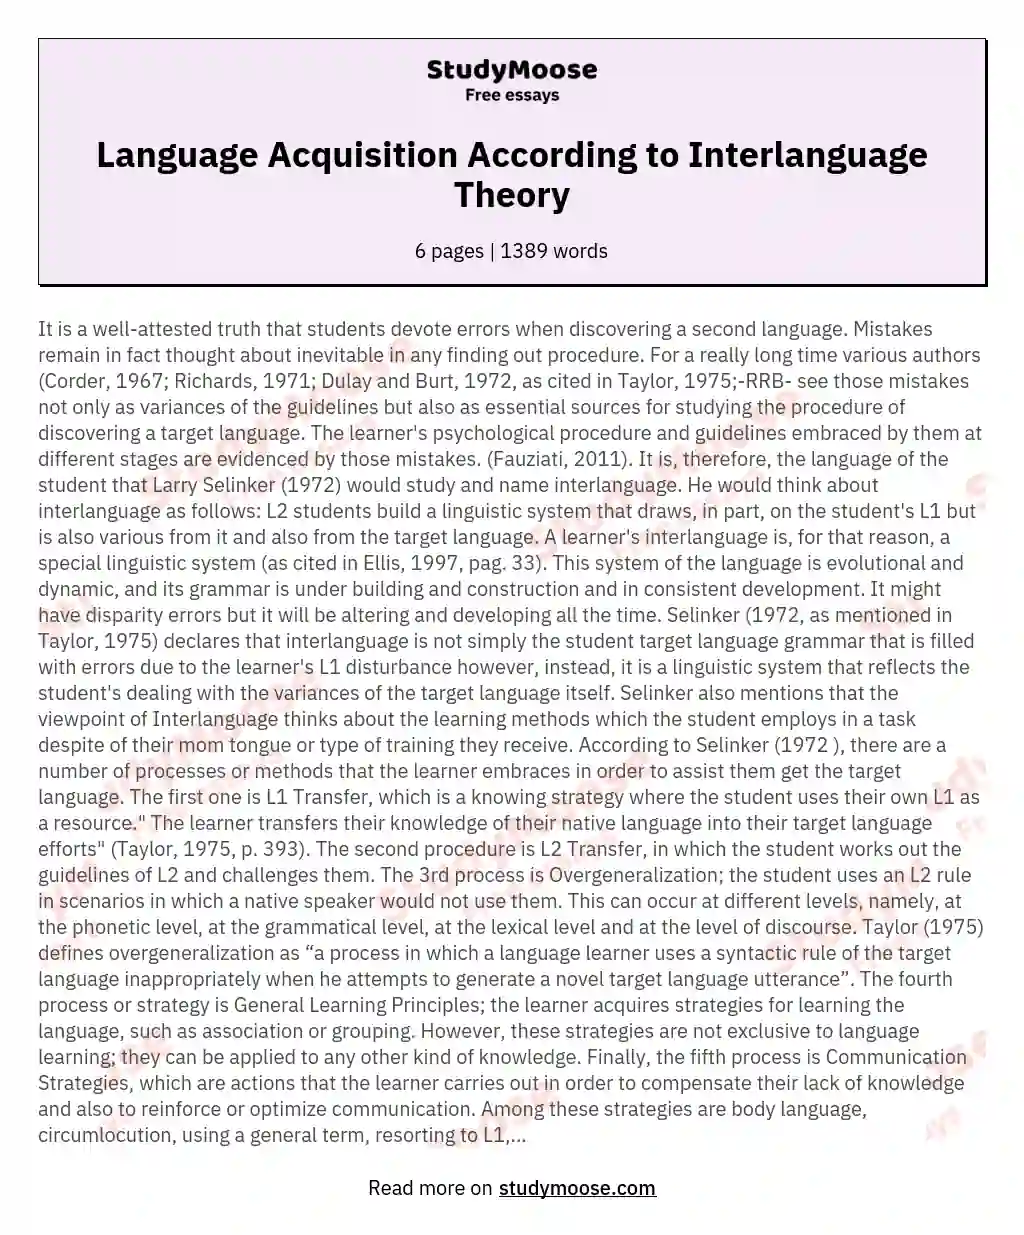 Language Acquisition According to Interlanguage Theory essay